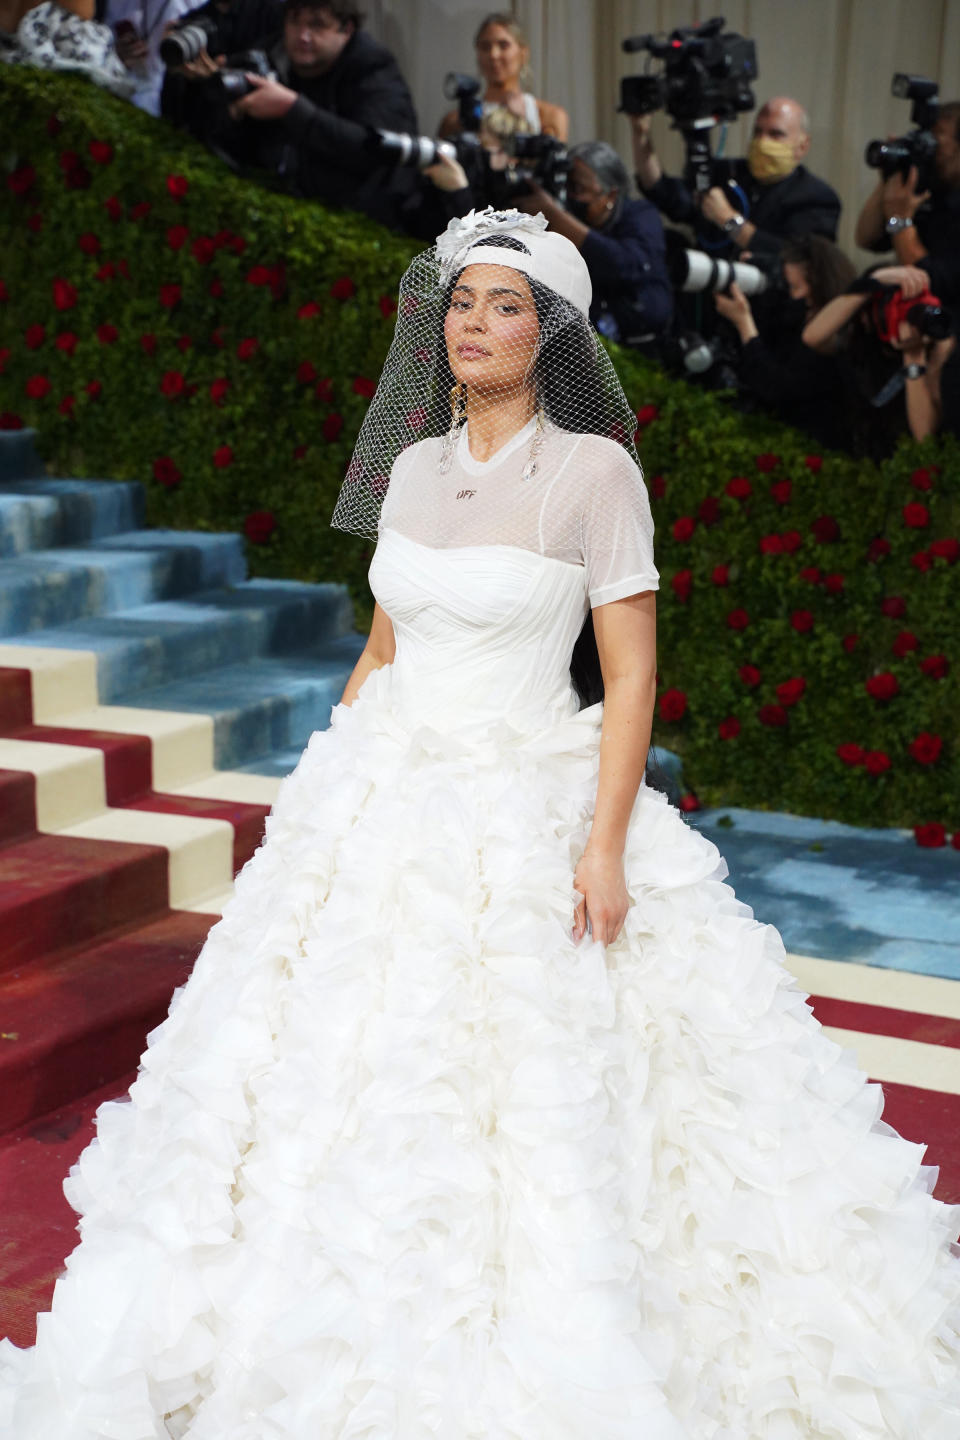 Kylie wears a wedding dress and veil